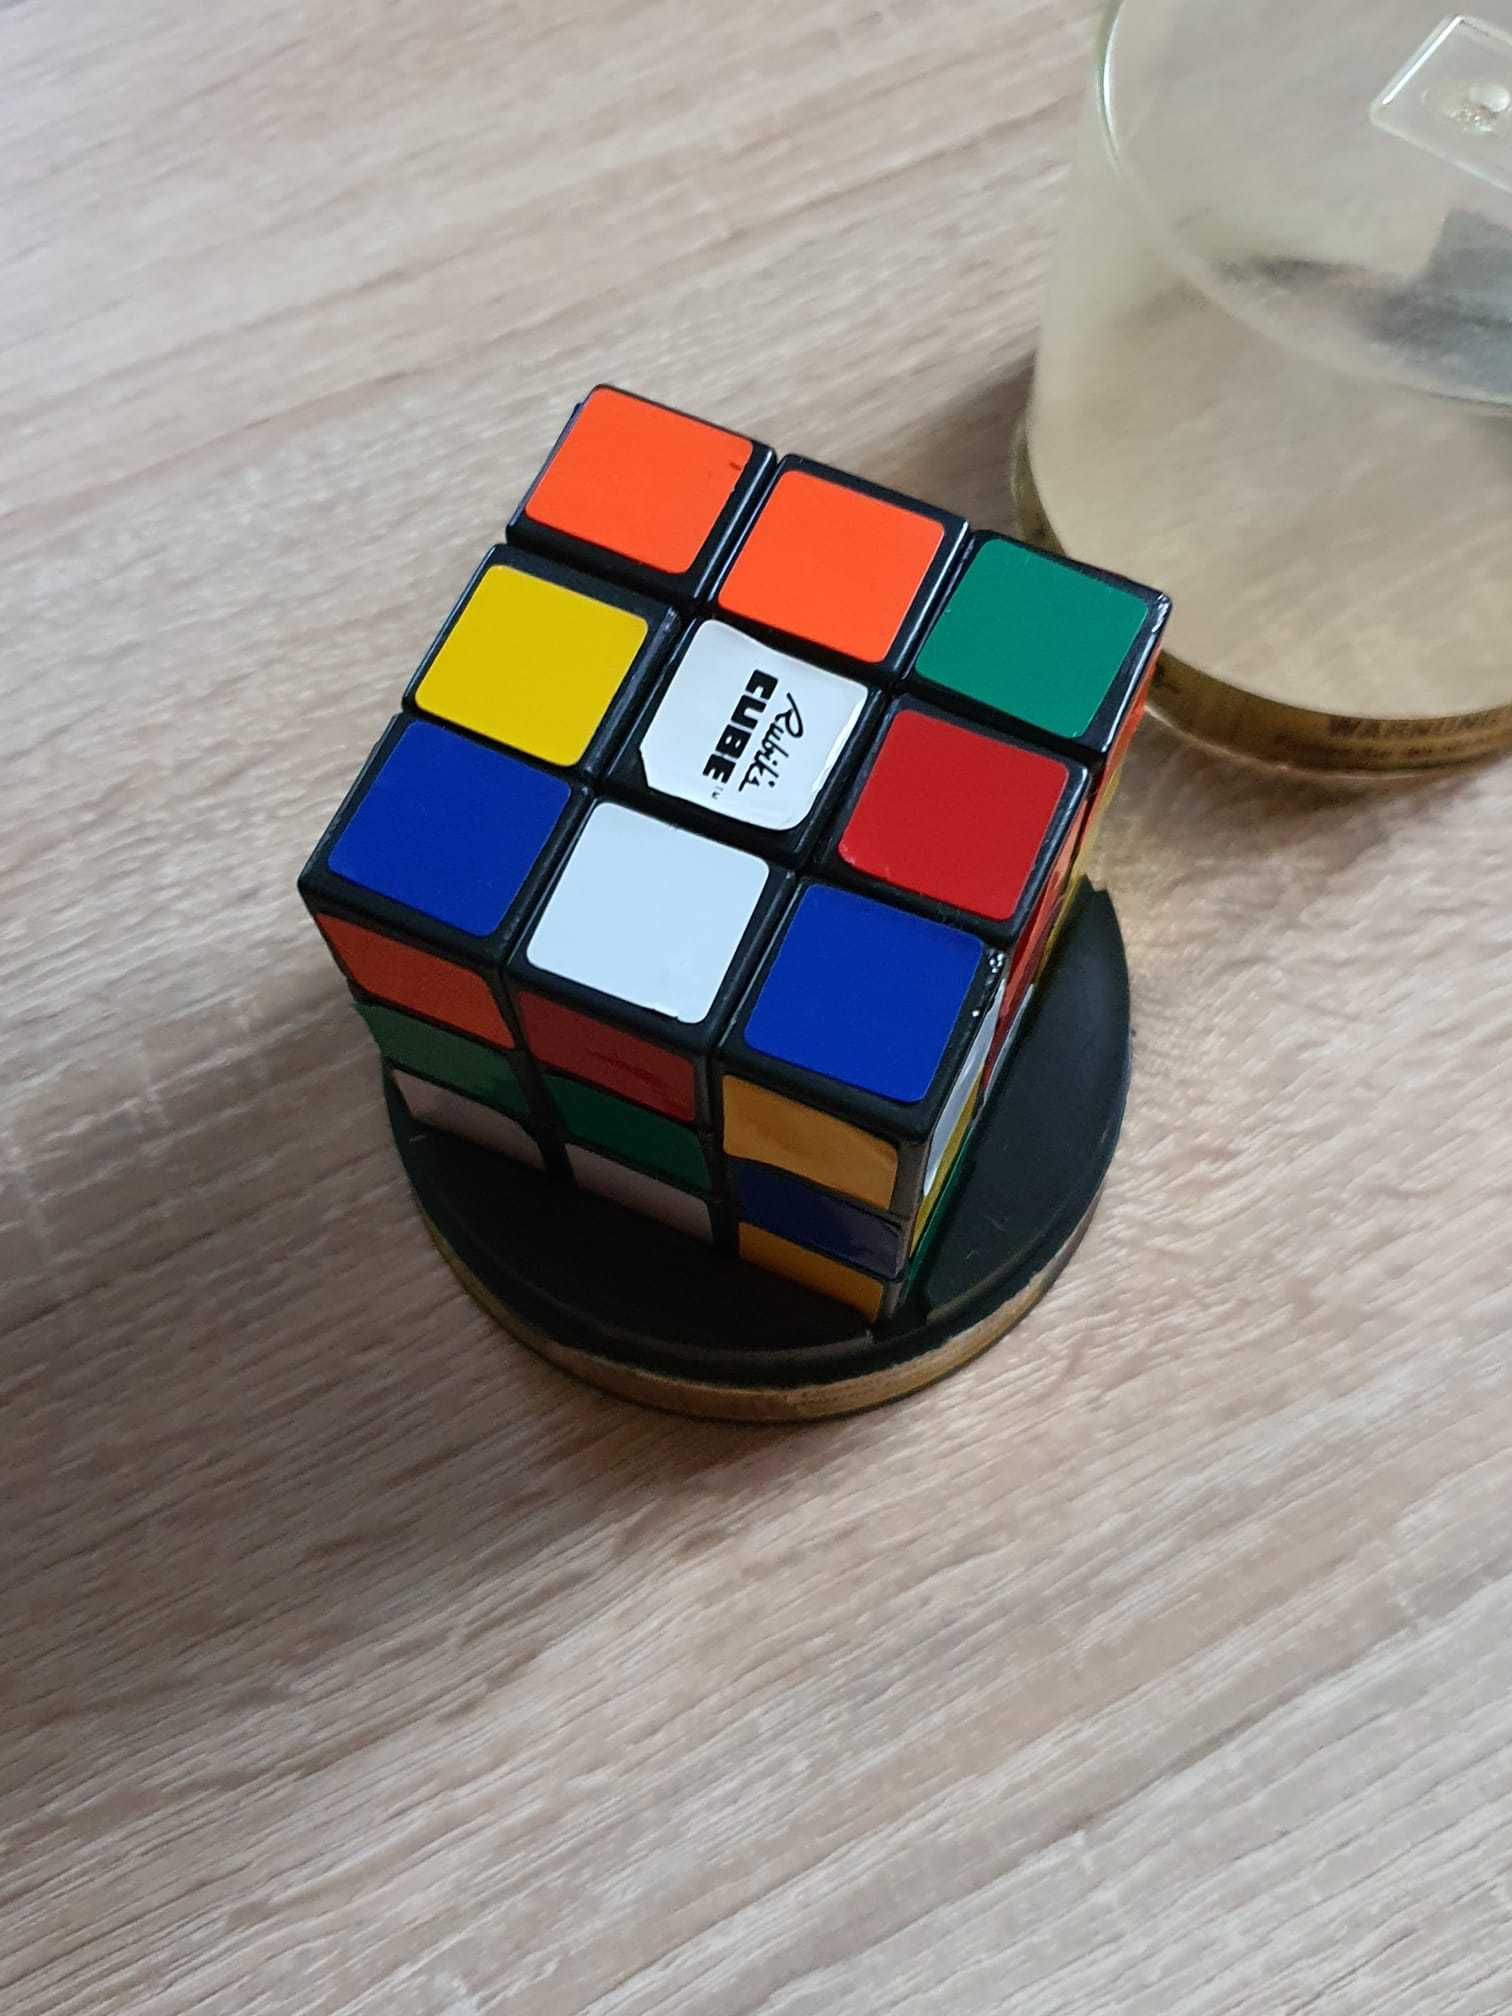 CUB Rubik original 1981